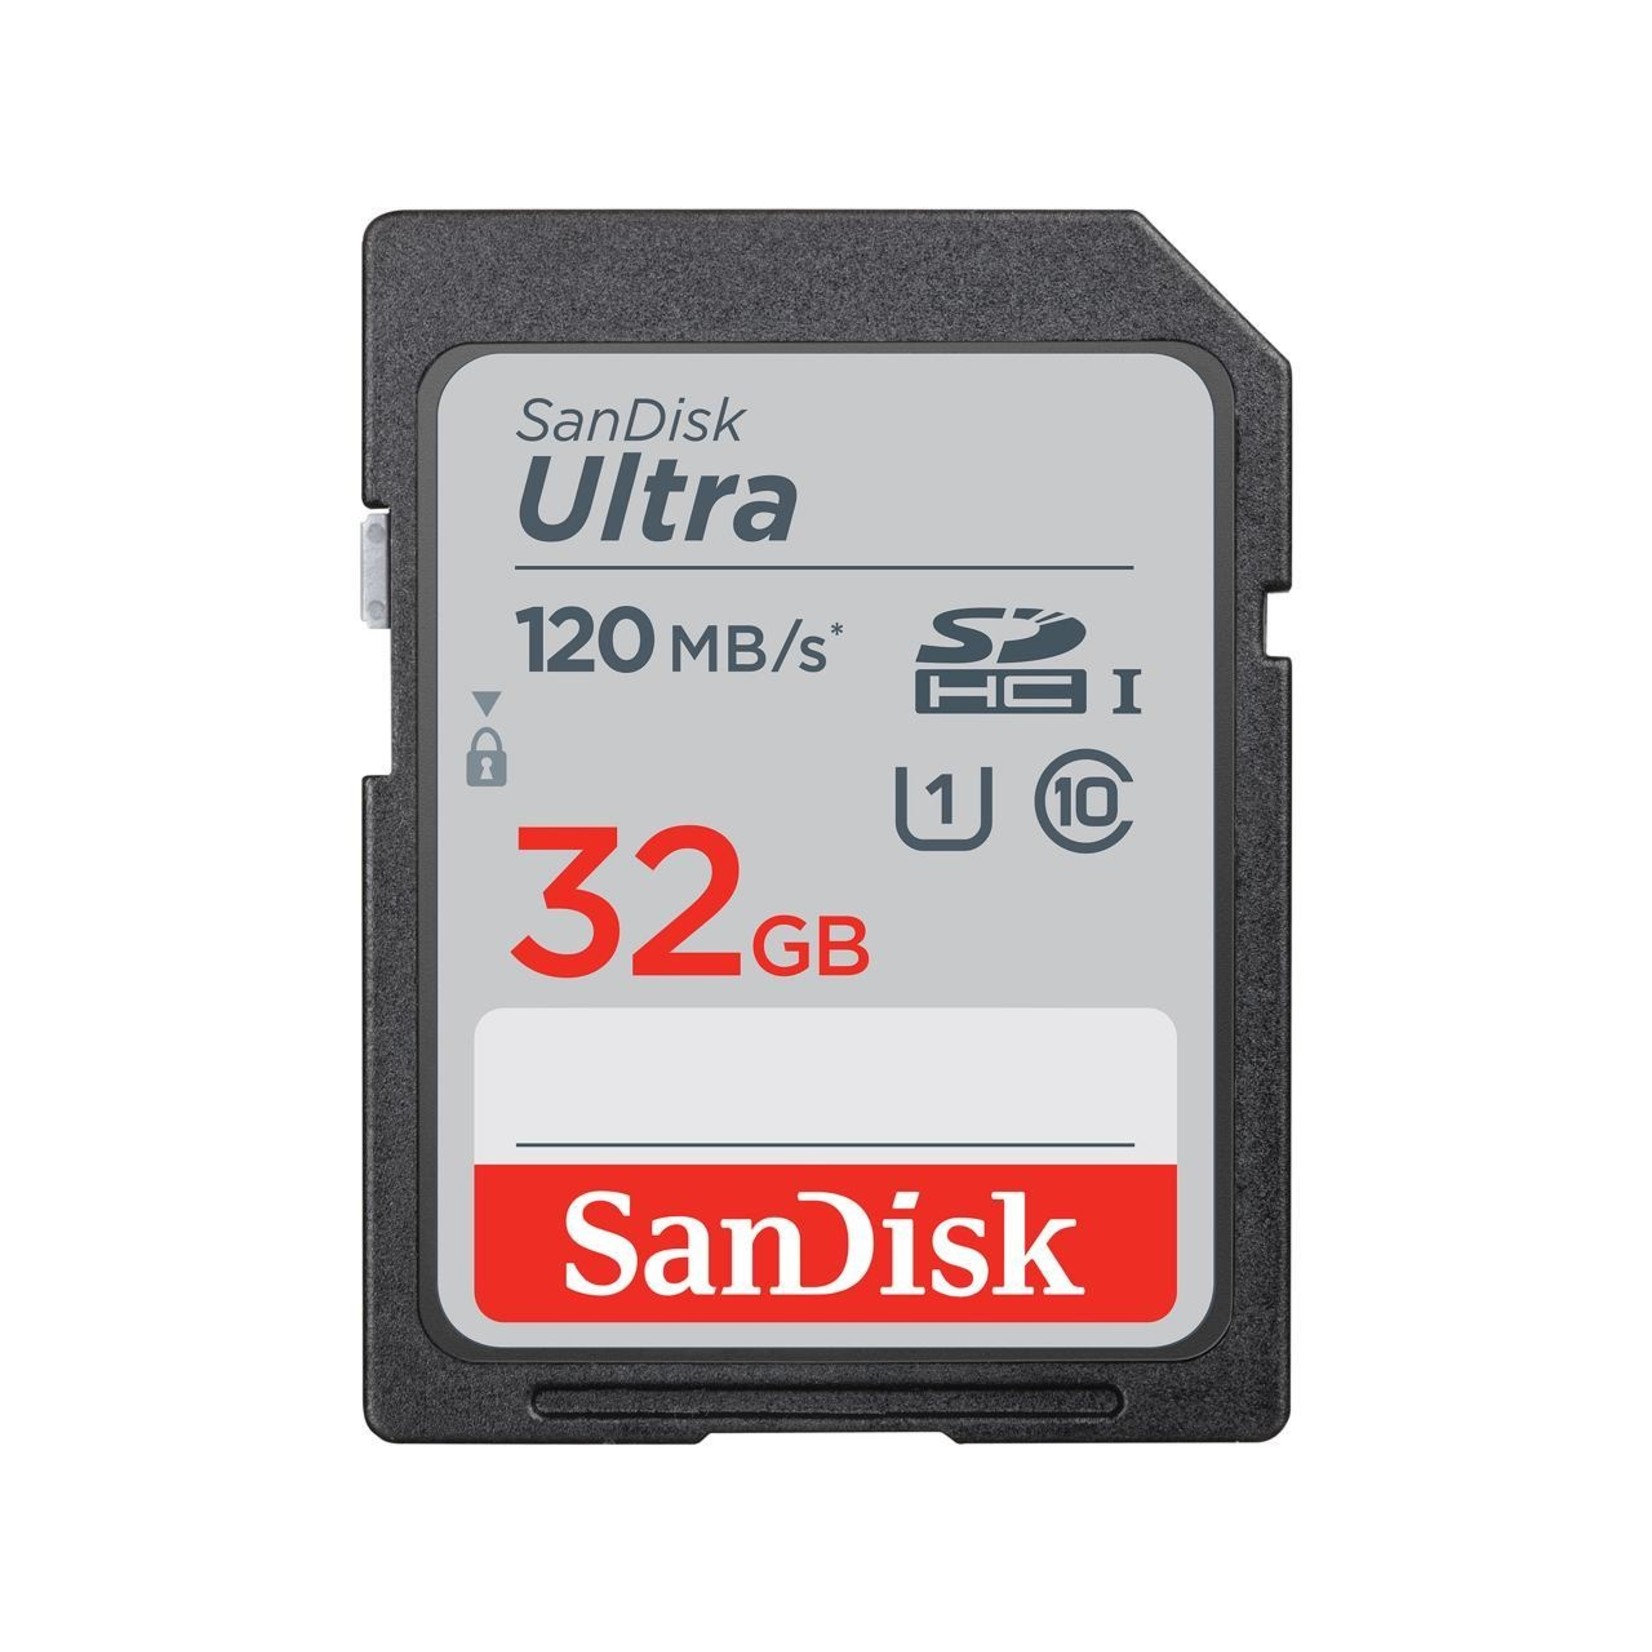 Boly Copy of Sandisk 32GB SD card